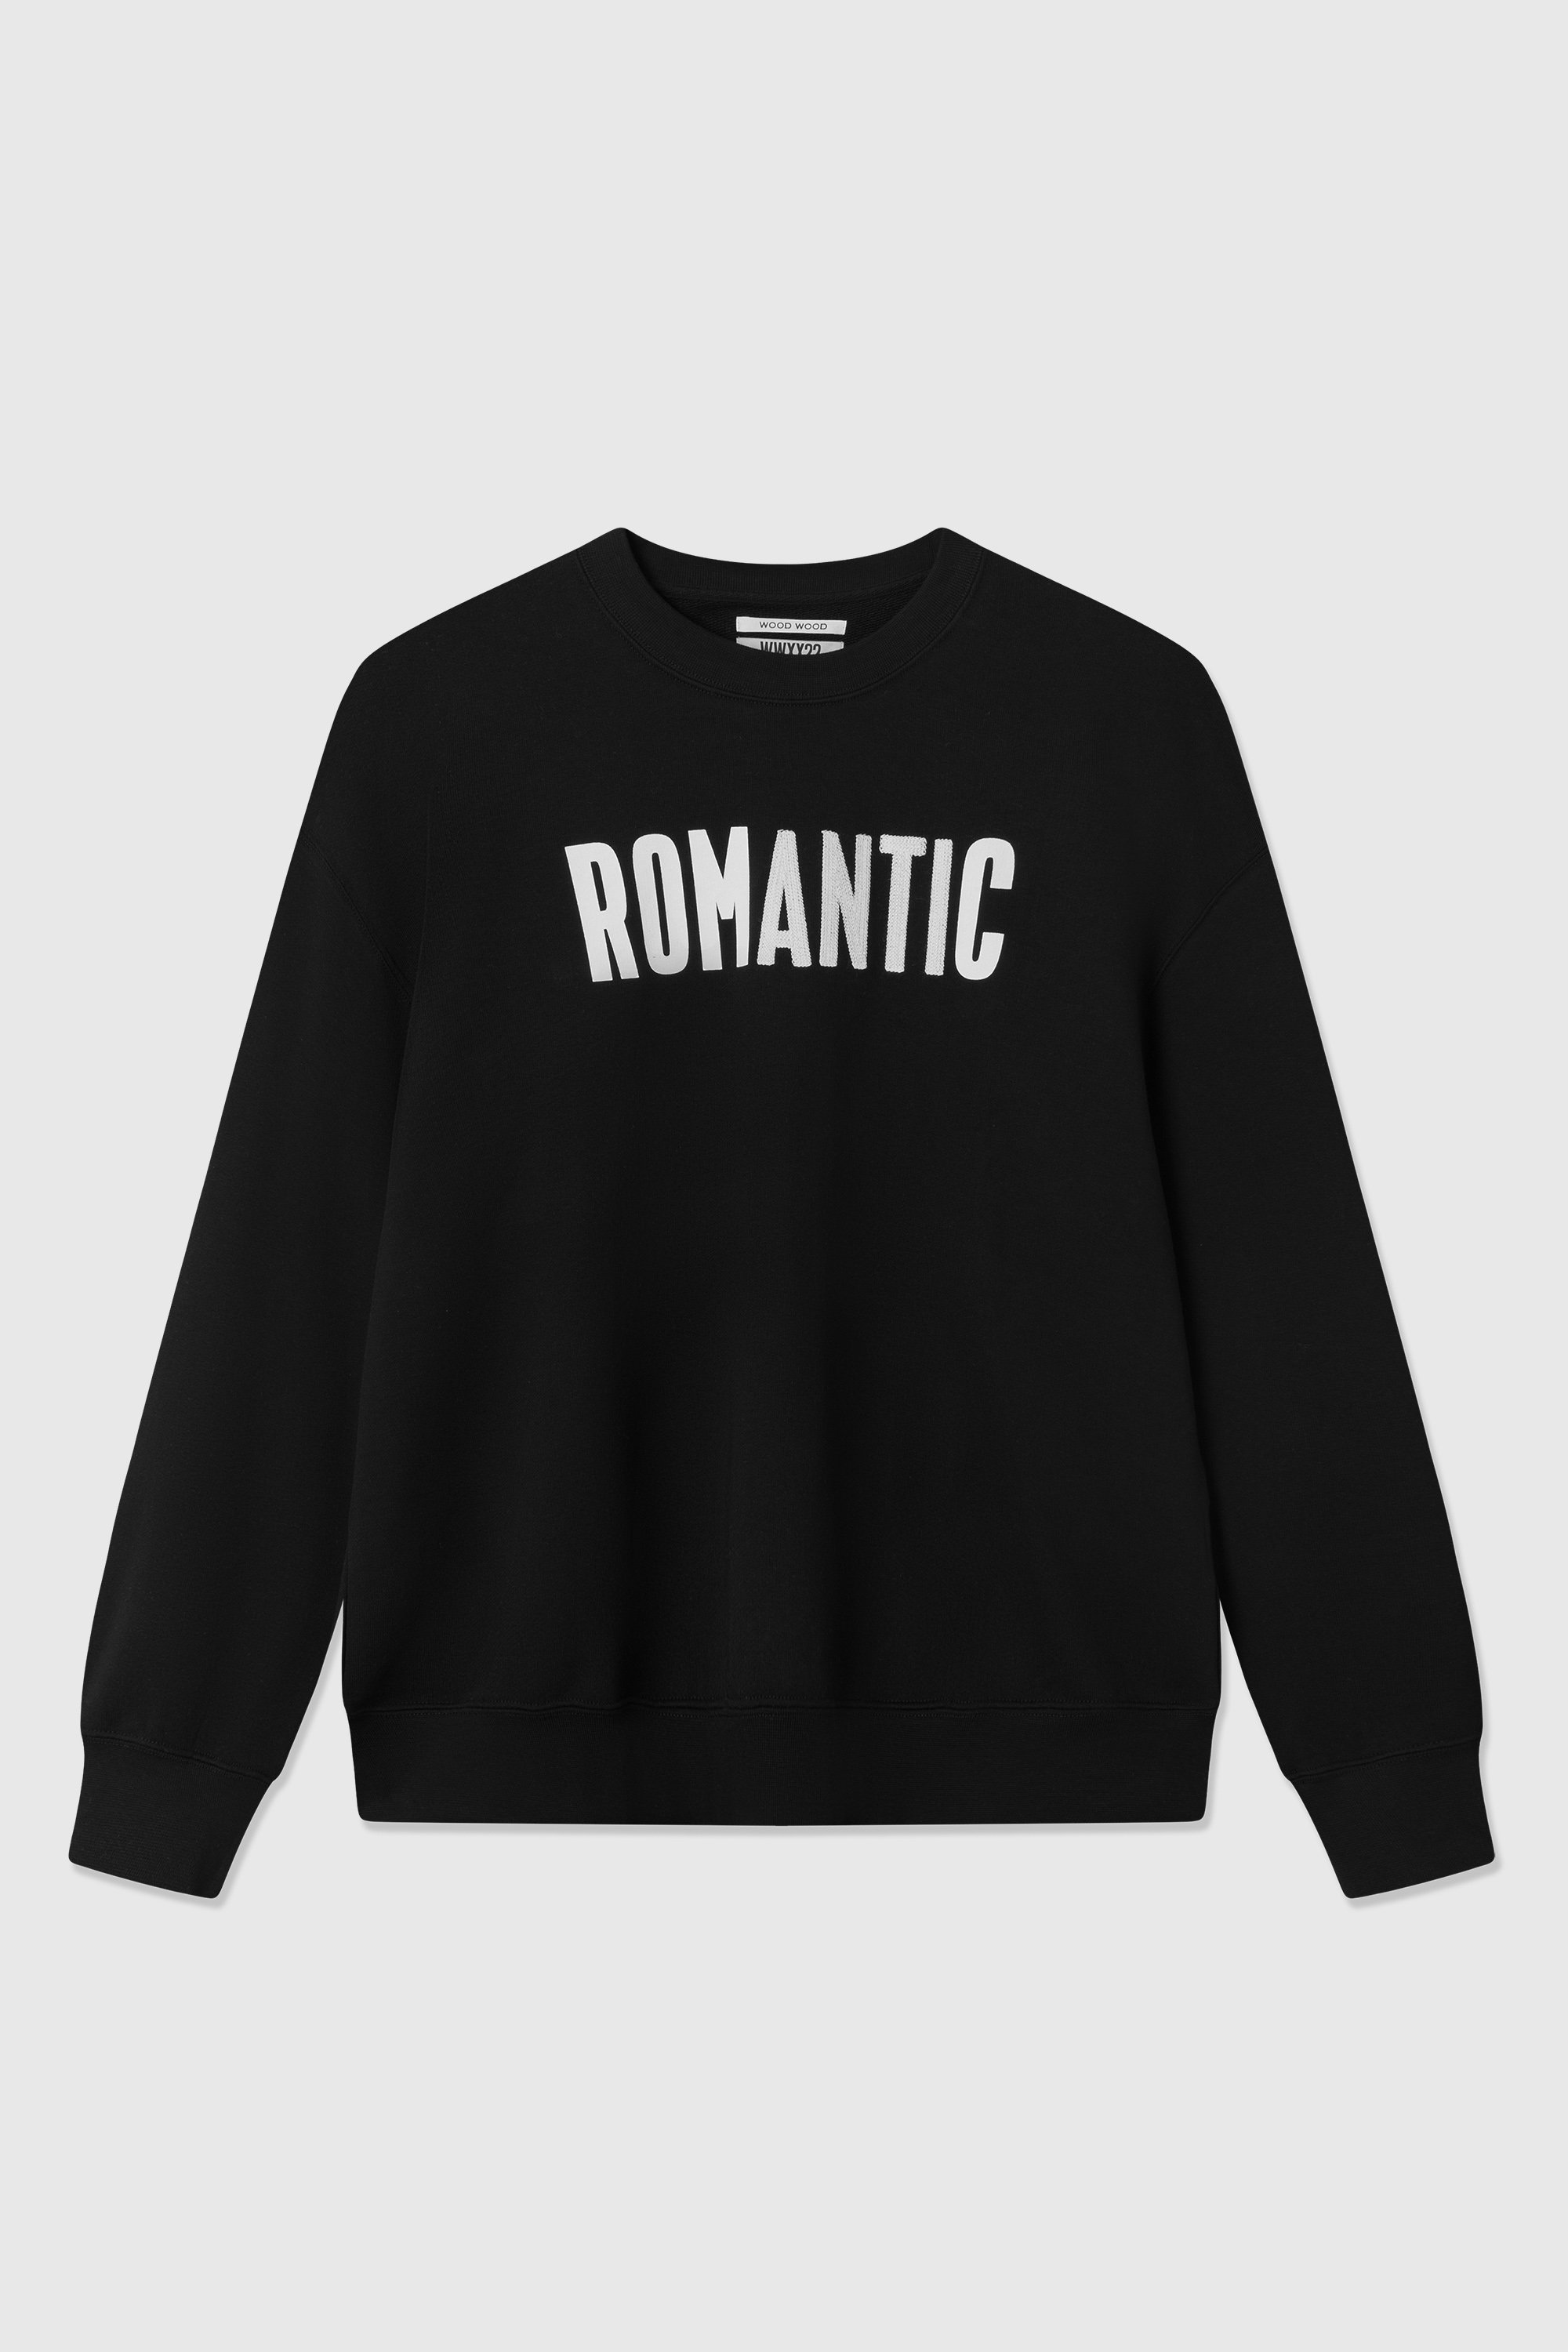 Edna Romantic sweatshirt